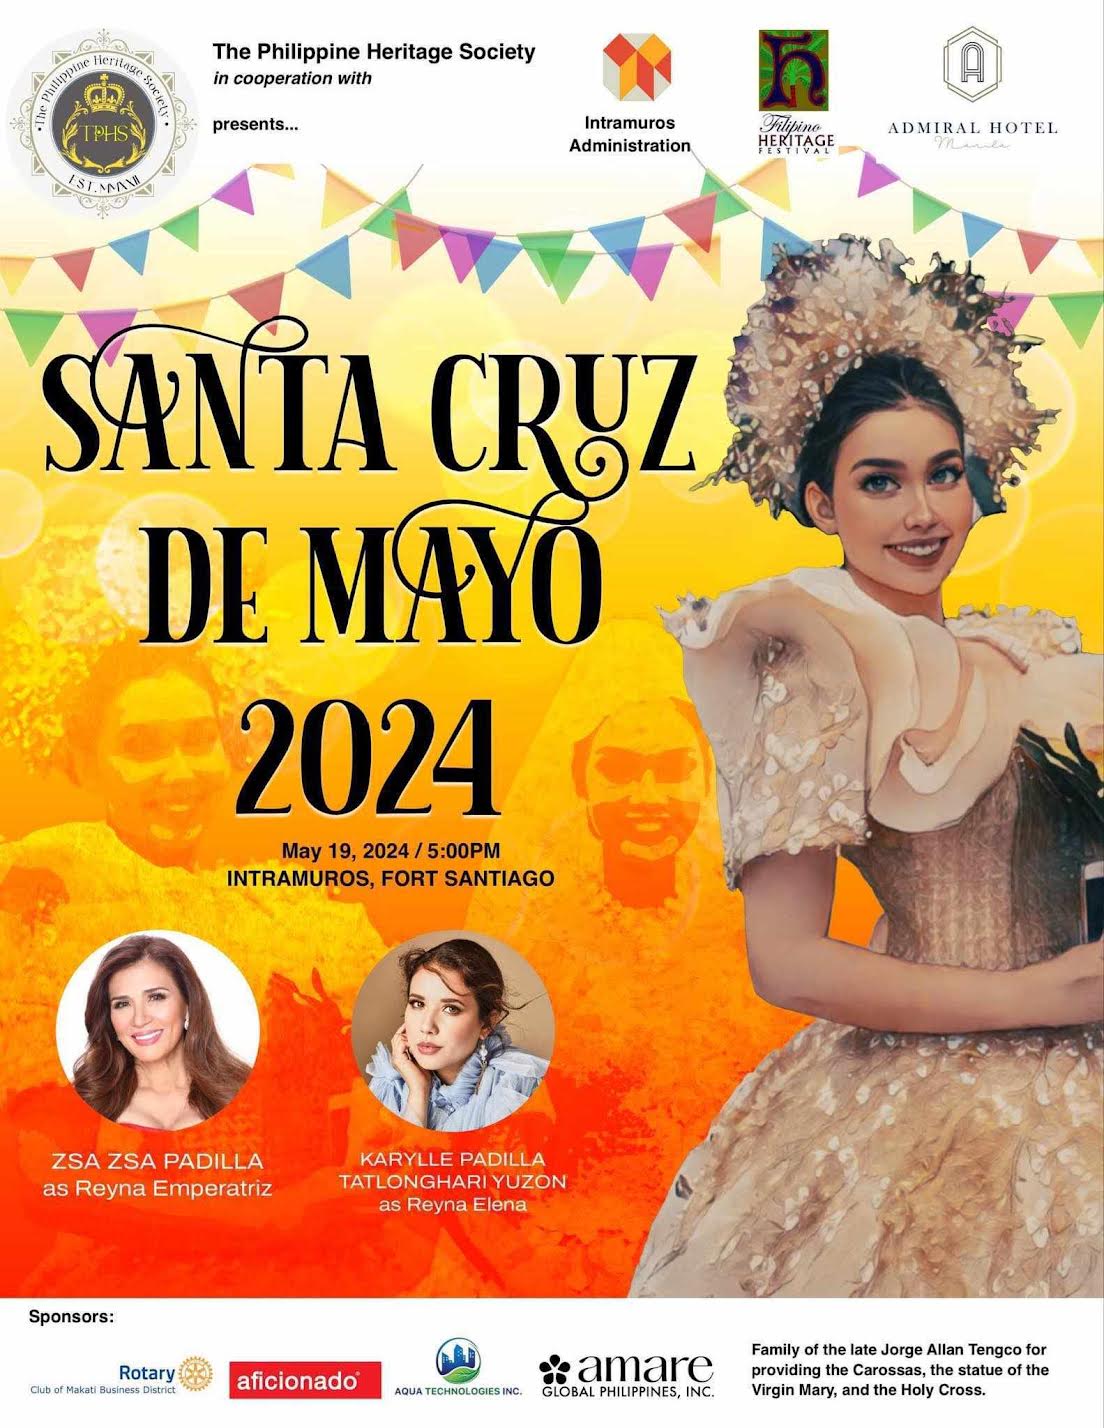 Zsa Zsa Padilla and Karylle appear on the poster of Santa Cruz de Mayo./PHILIPPINE HERITAGE SOCIETY IMAGE